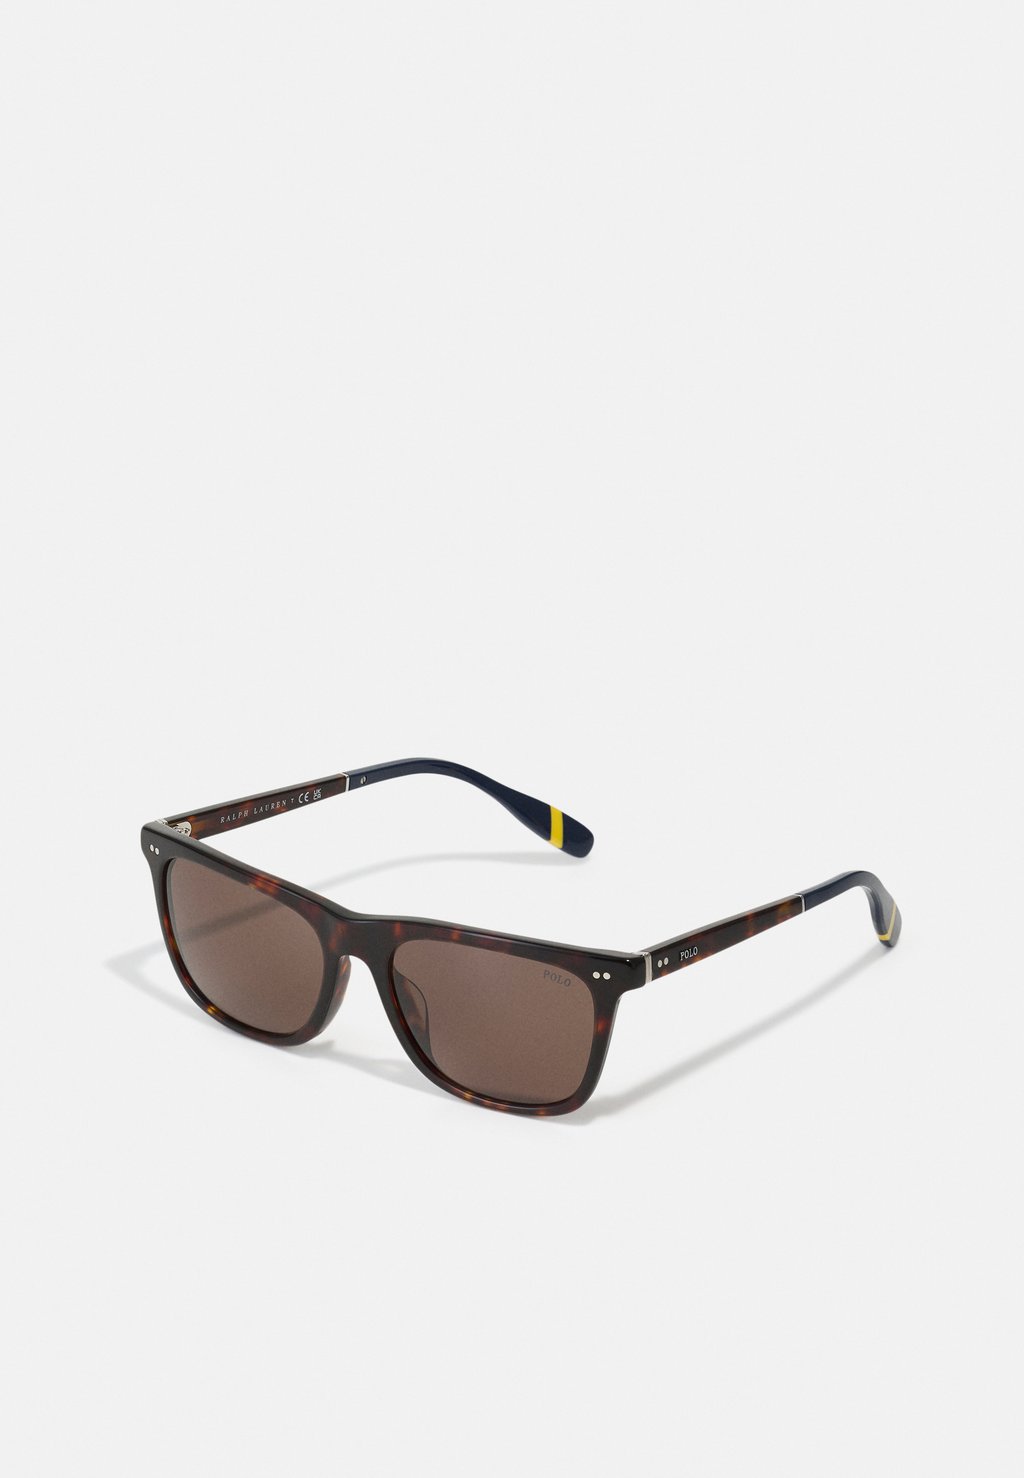 Солнцезащитные очки Polo Ralph Lauren, блестящая темная гавана